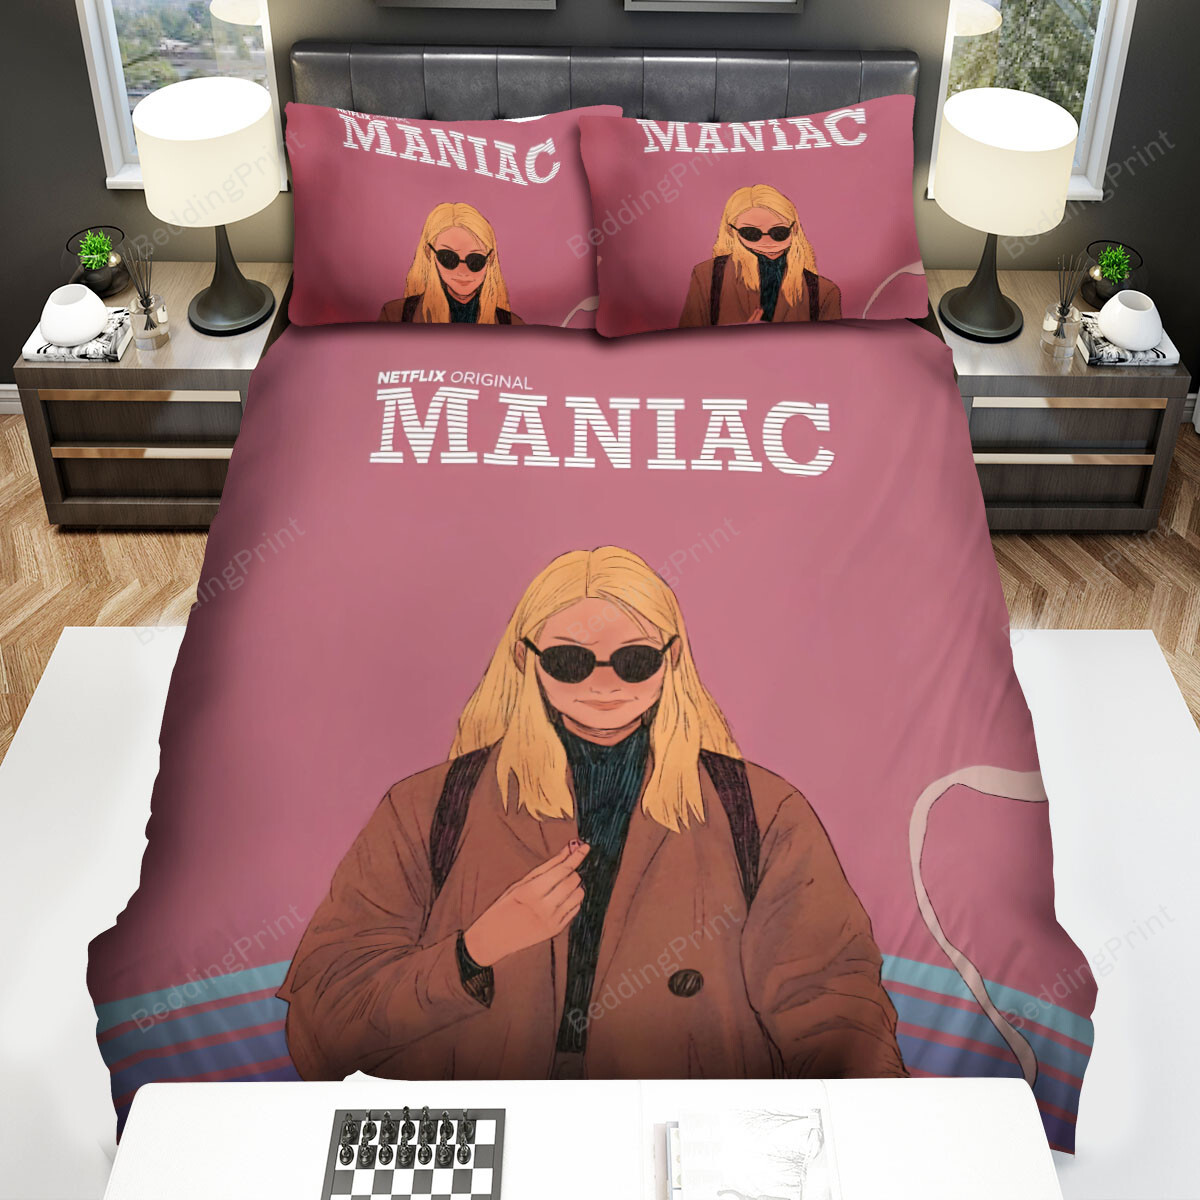 Maniac (2018) Movie Illustration 4 Bed Sheets Spread Comforter Duvet Cover Bedding Sets